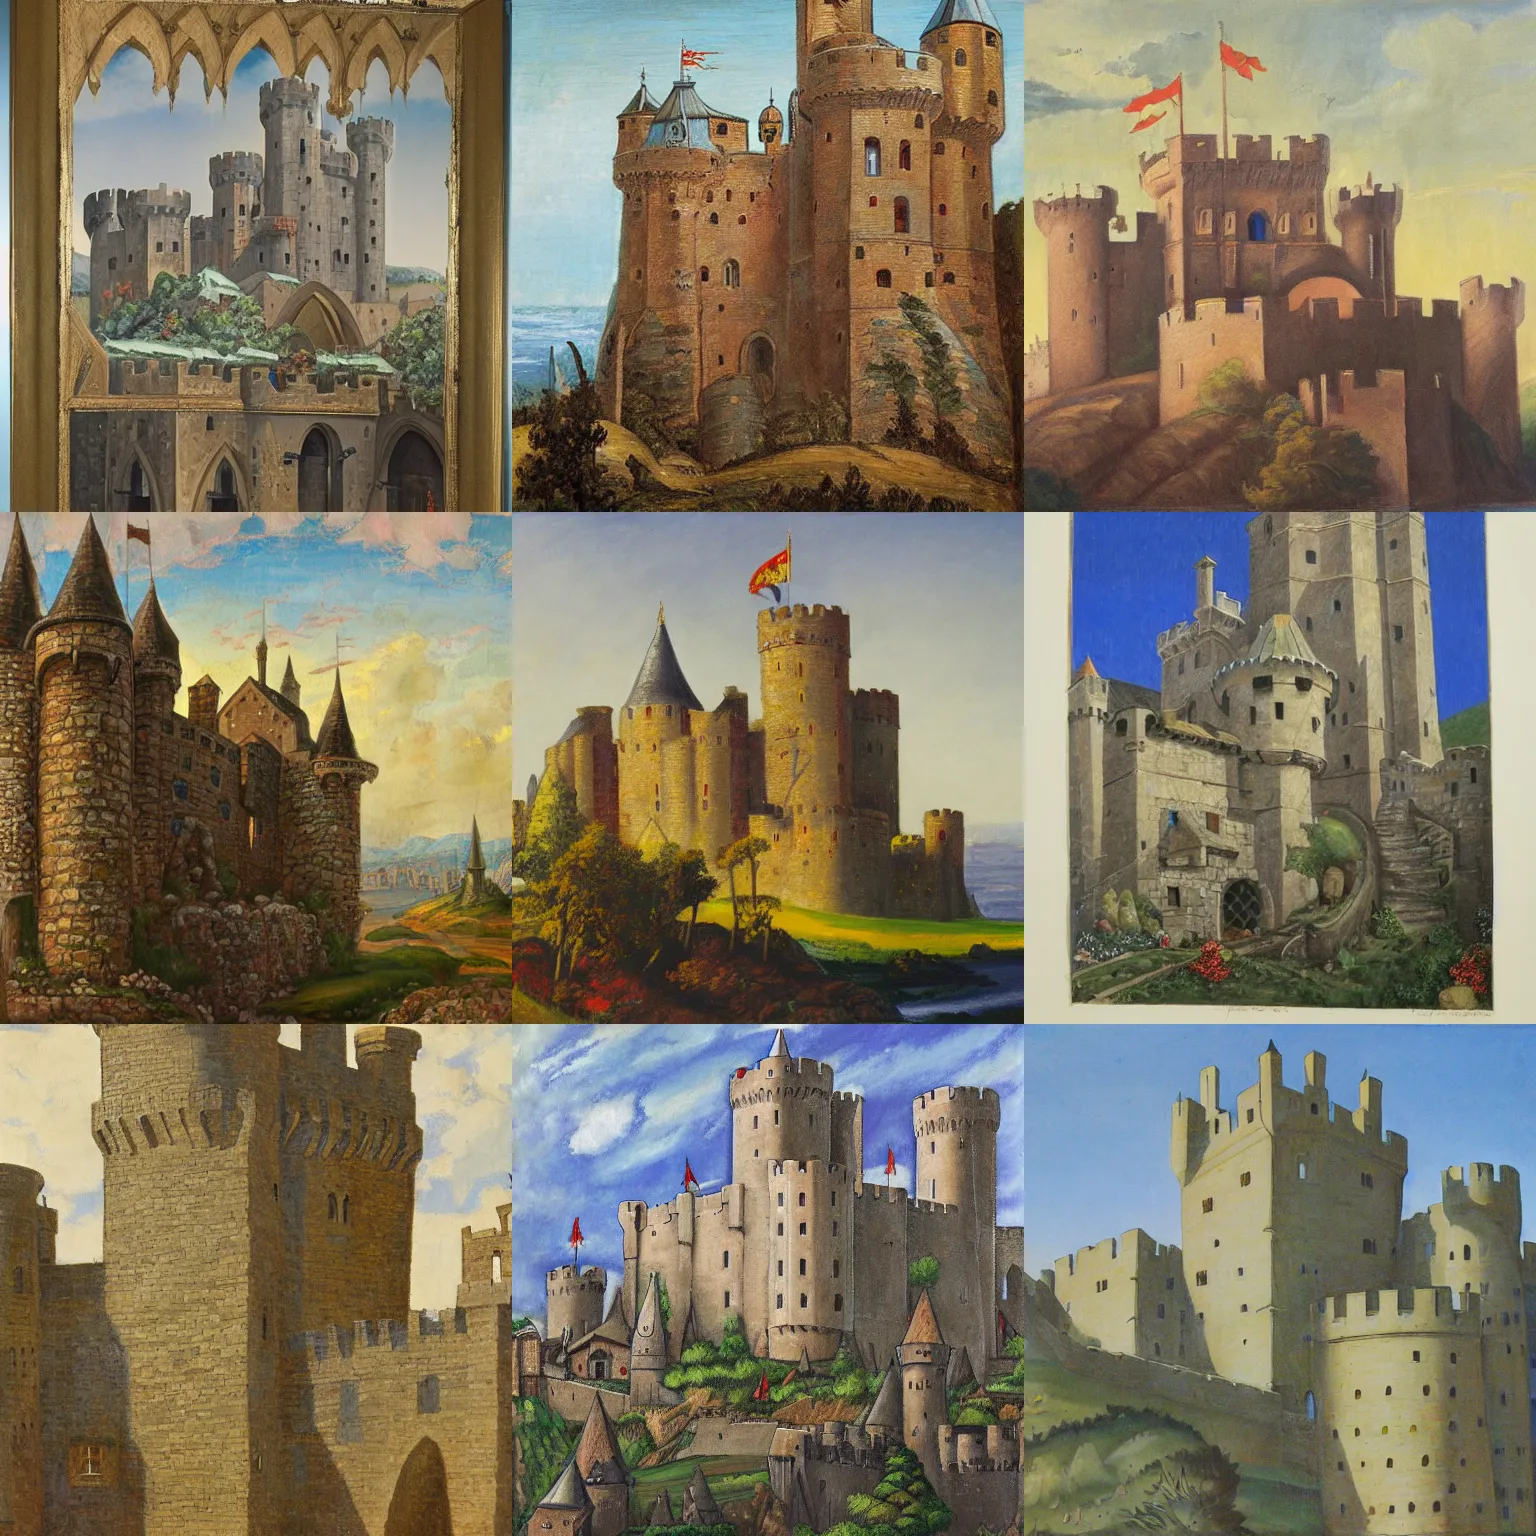 Prompt: medieval castle, by joseph stella